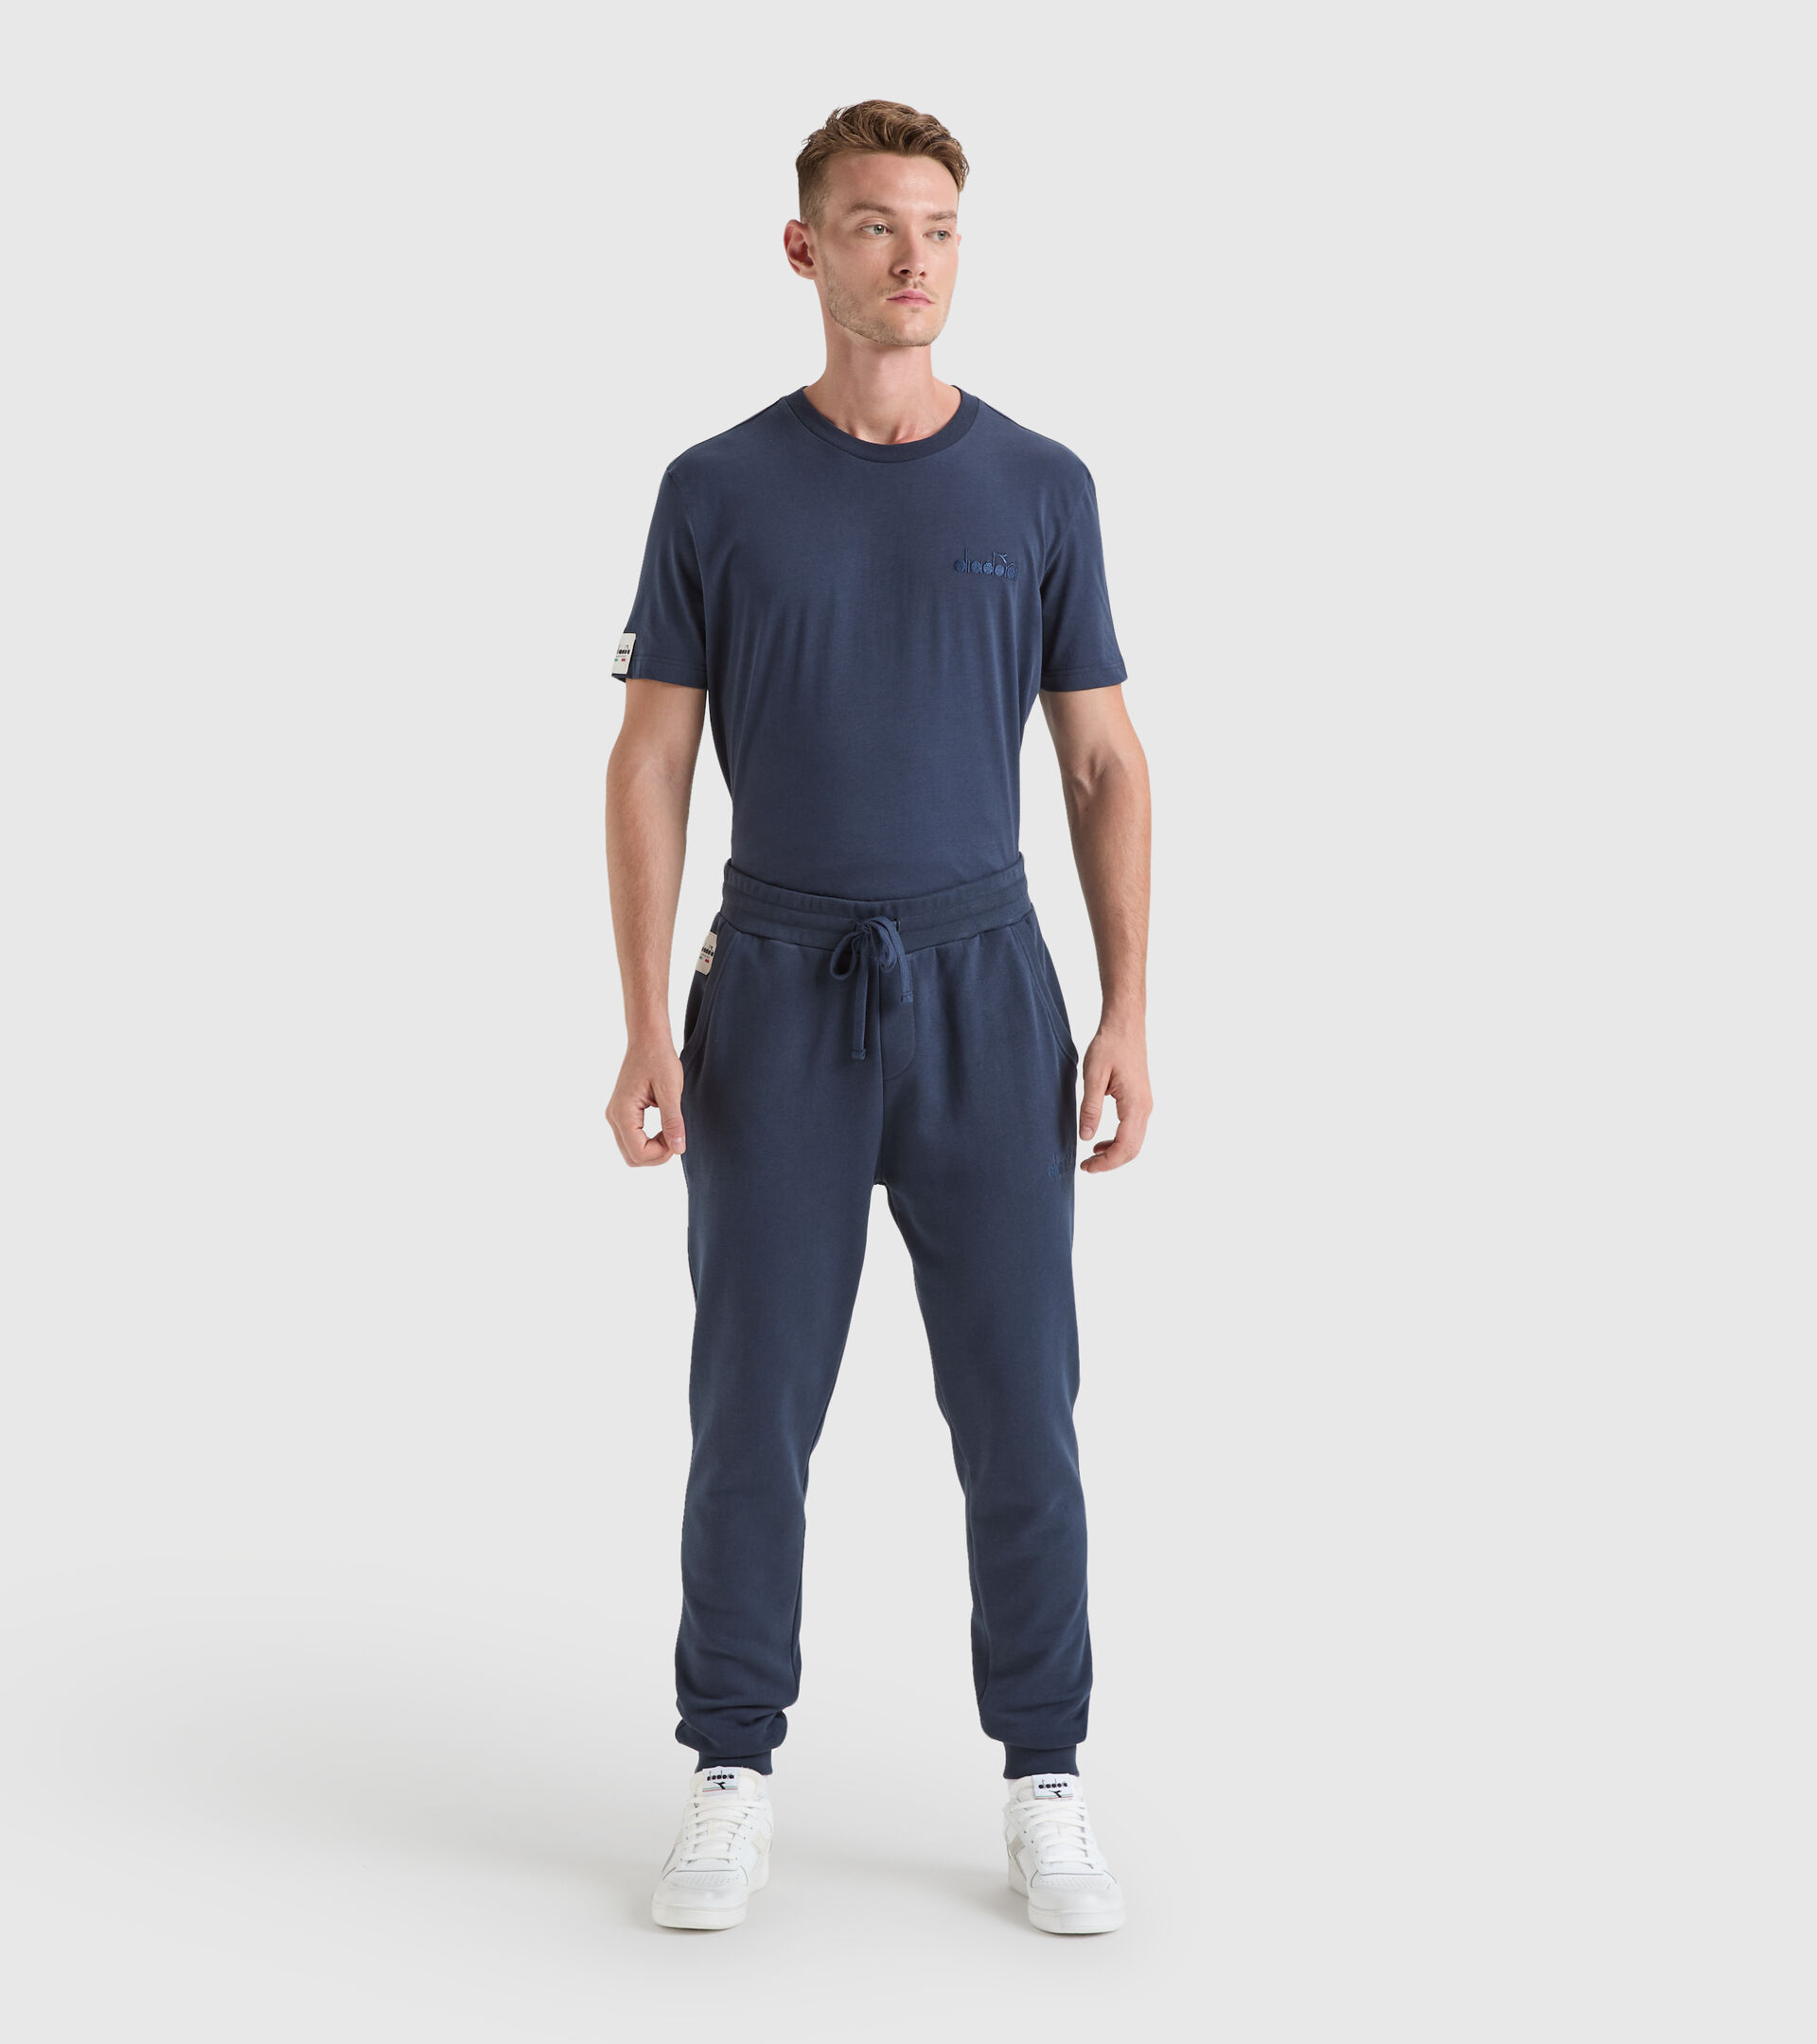 Cotton sports trousers - Made in Italy - Men JOGGER PANT MII BLUE CORSAIR - Diadora